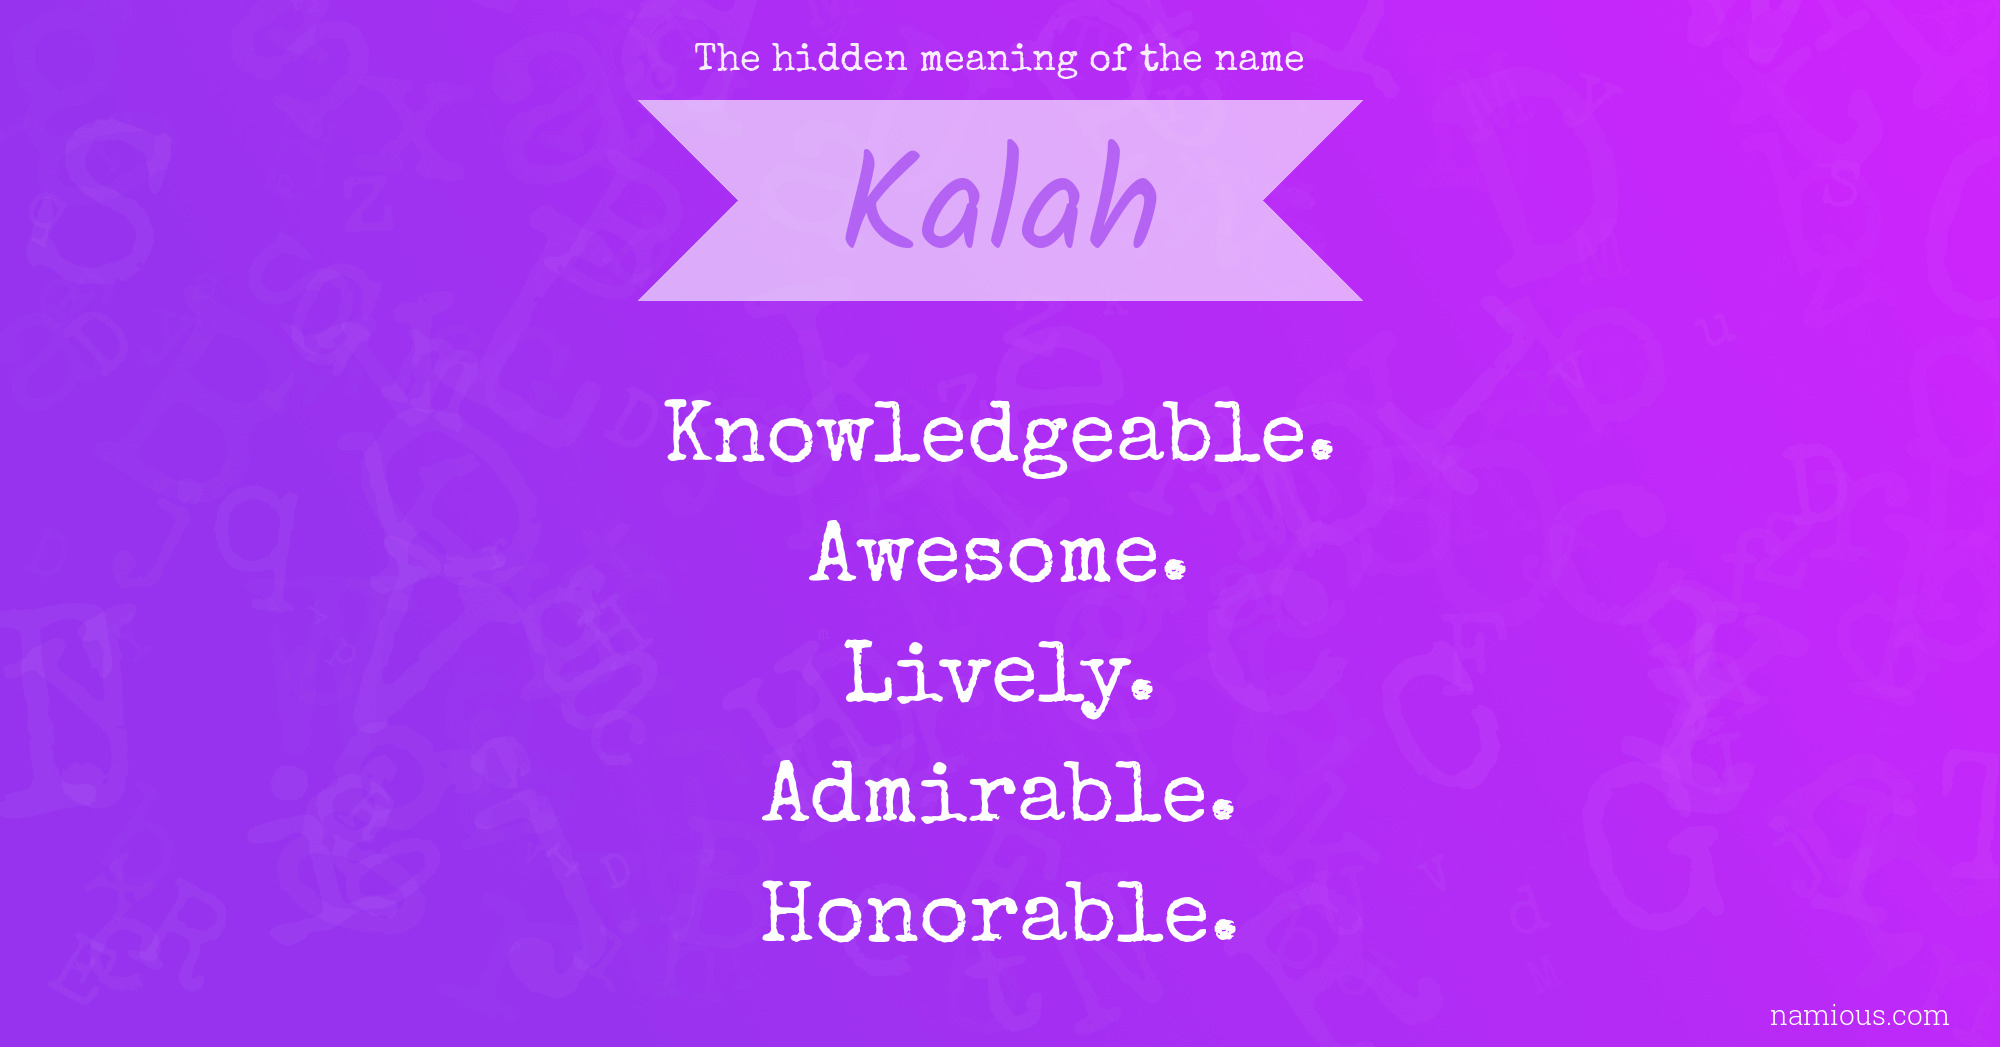 The hidden meaning of the name Kalah